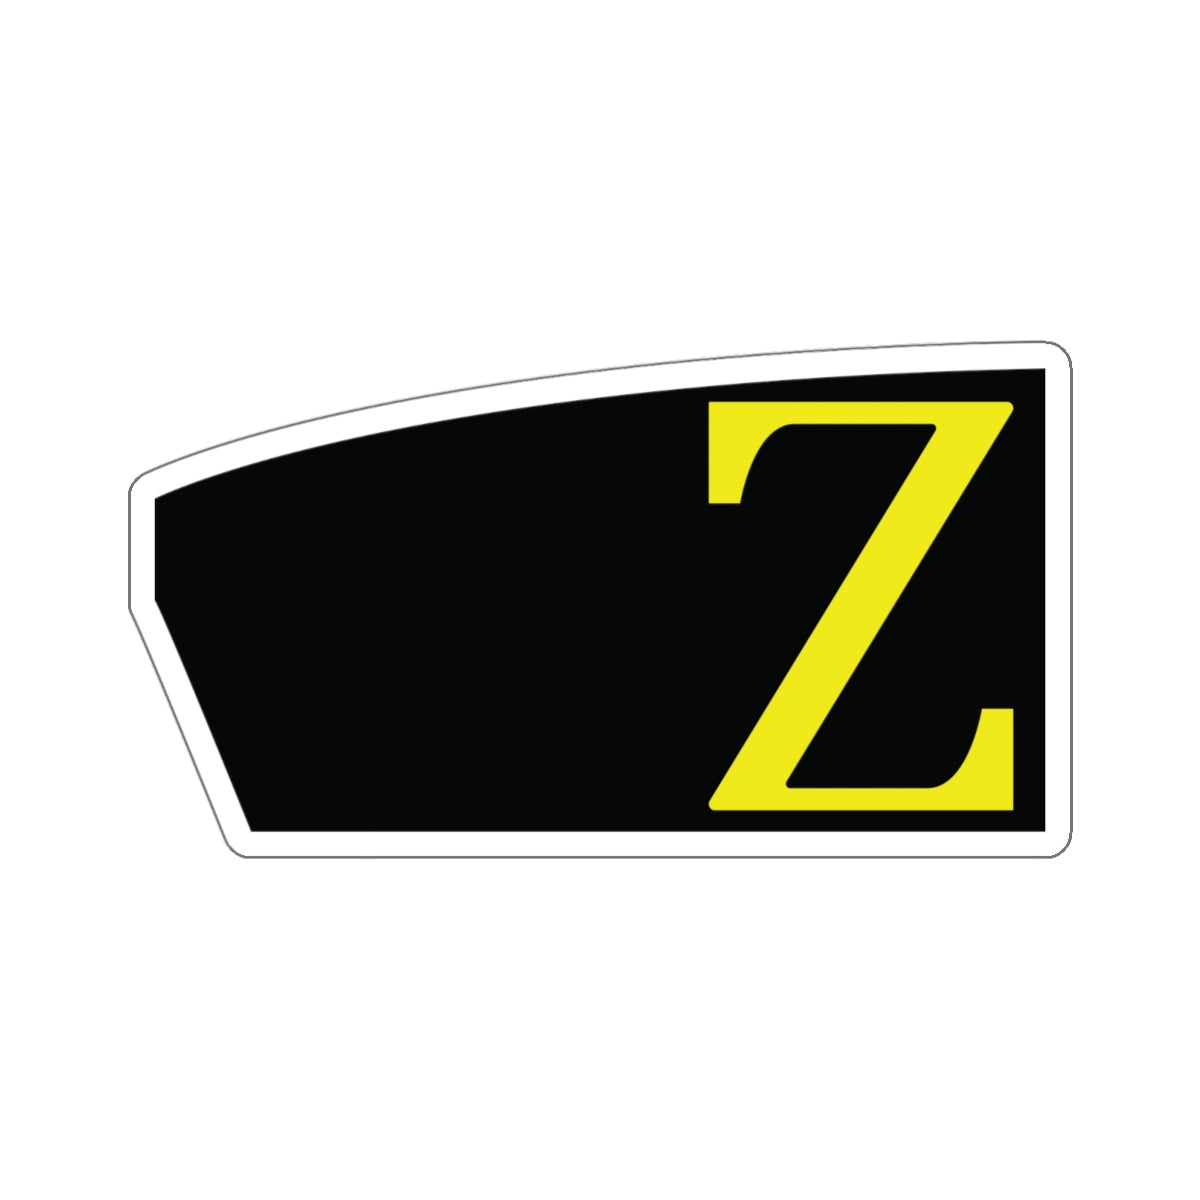 ZLAC Rowing Club Sticker